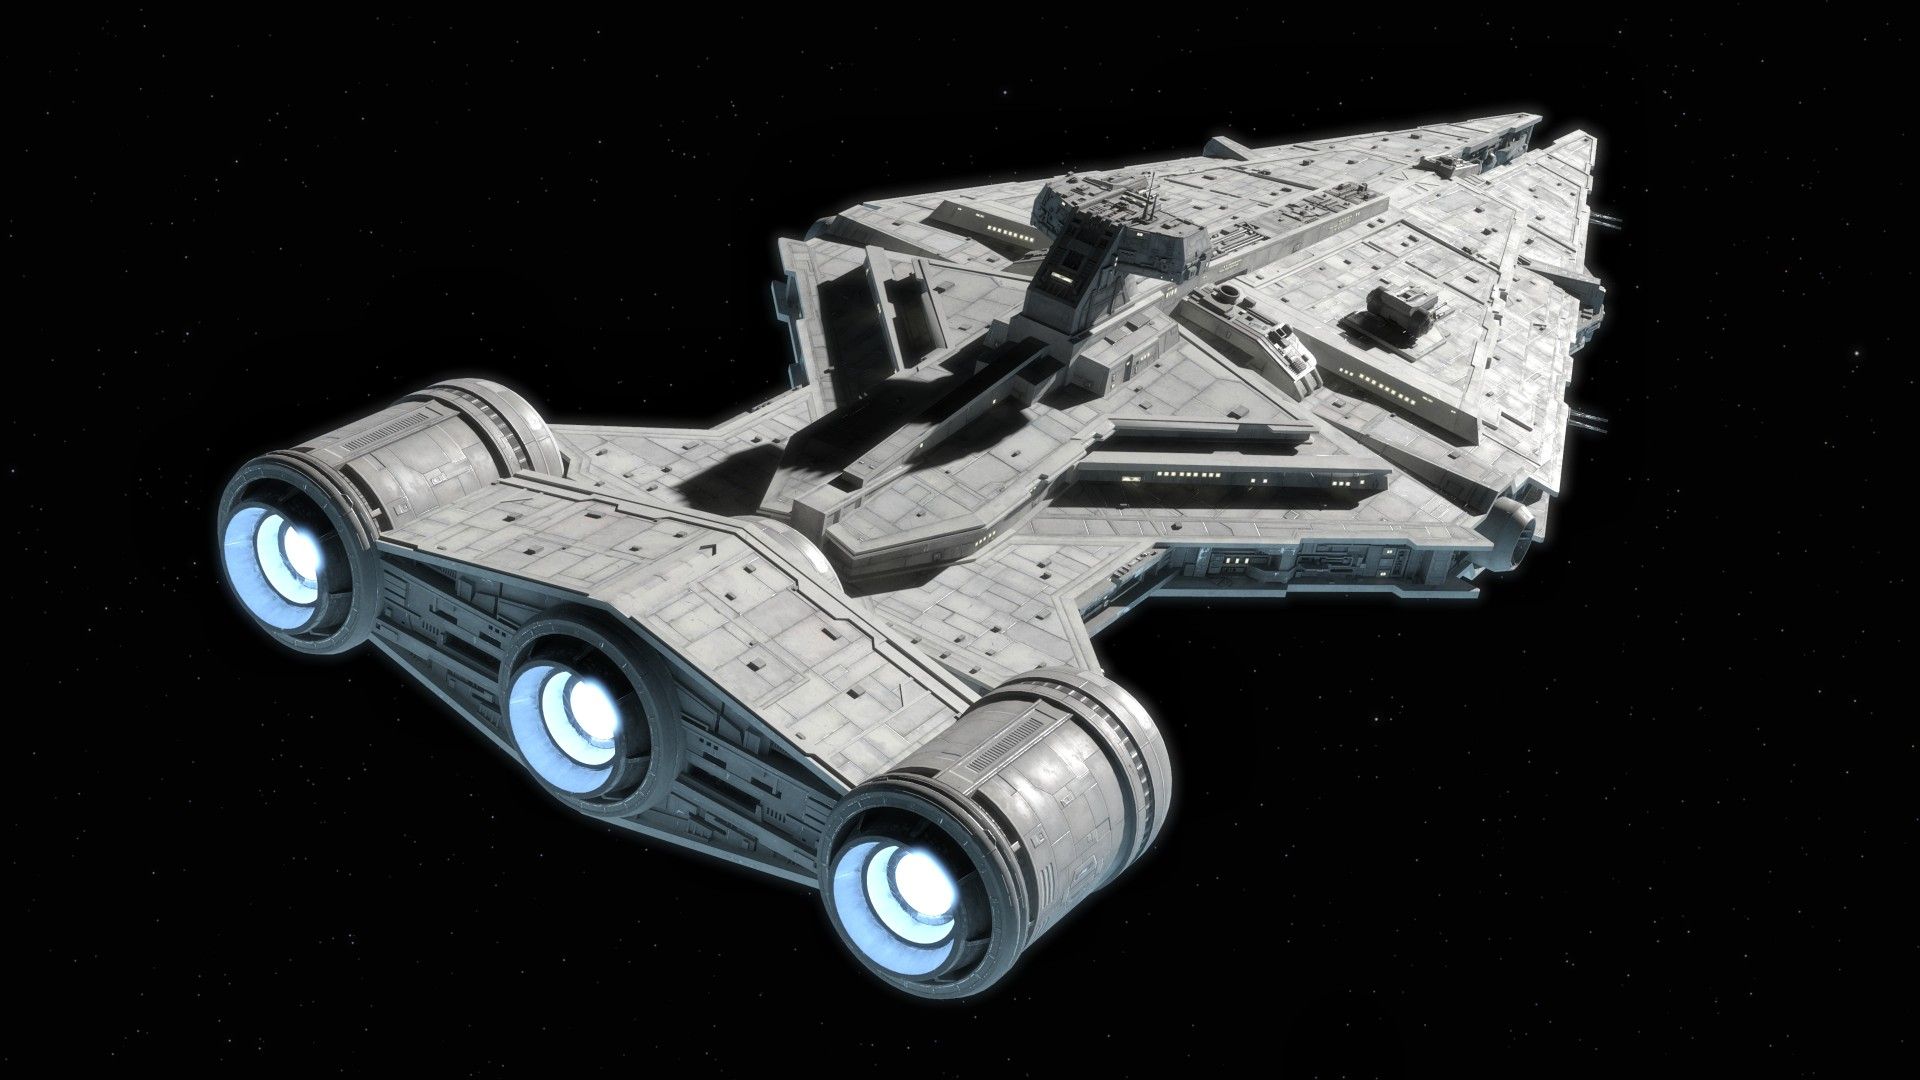 Star Wars #starwars Arquitens class light Imperial cruiser. Star wars spaceships, Star wars ships design, Star wars ships